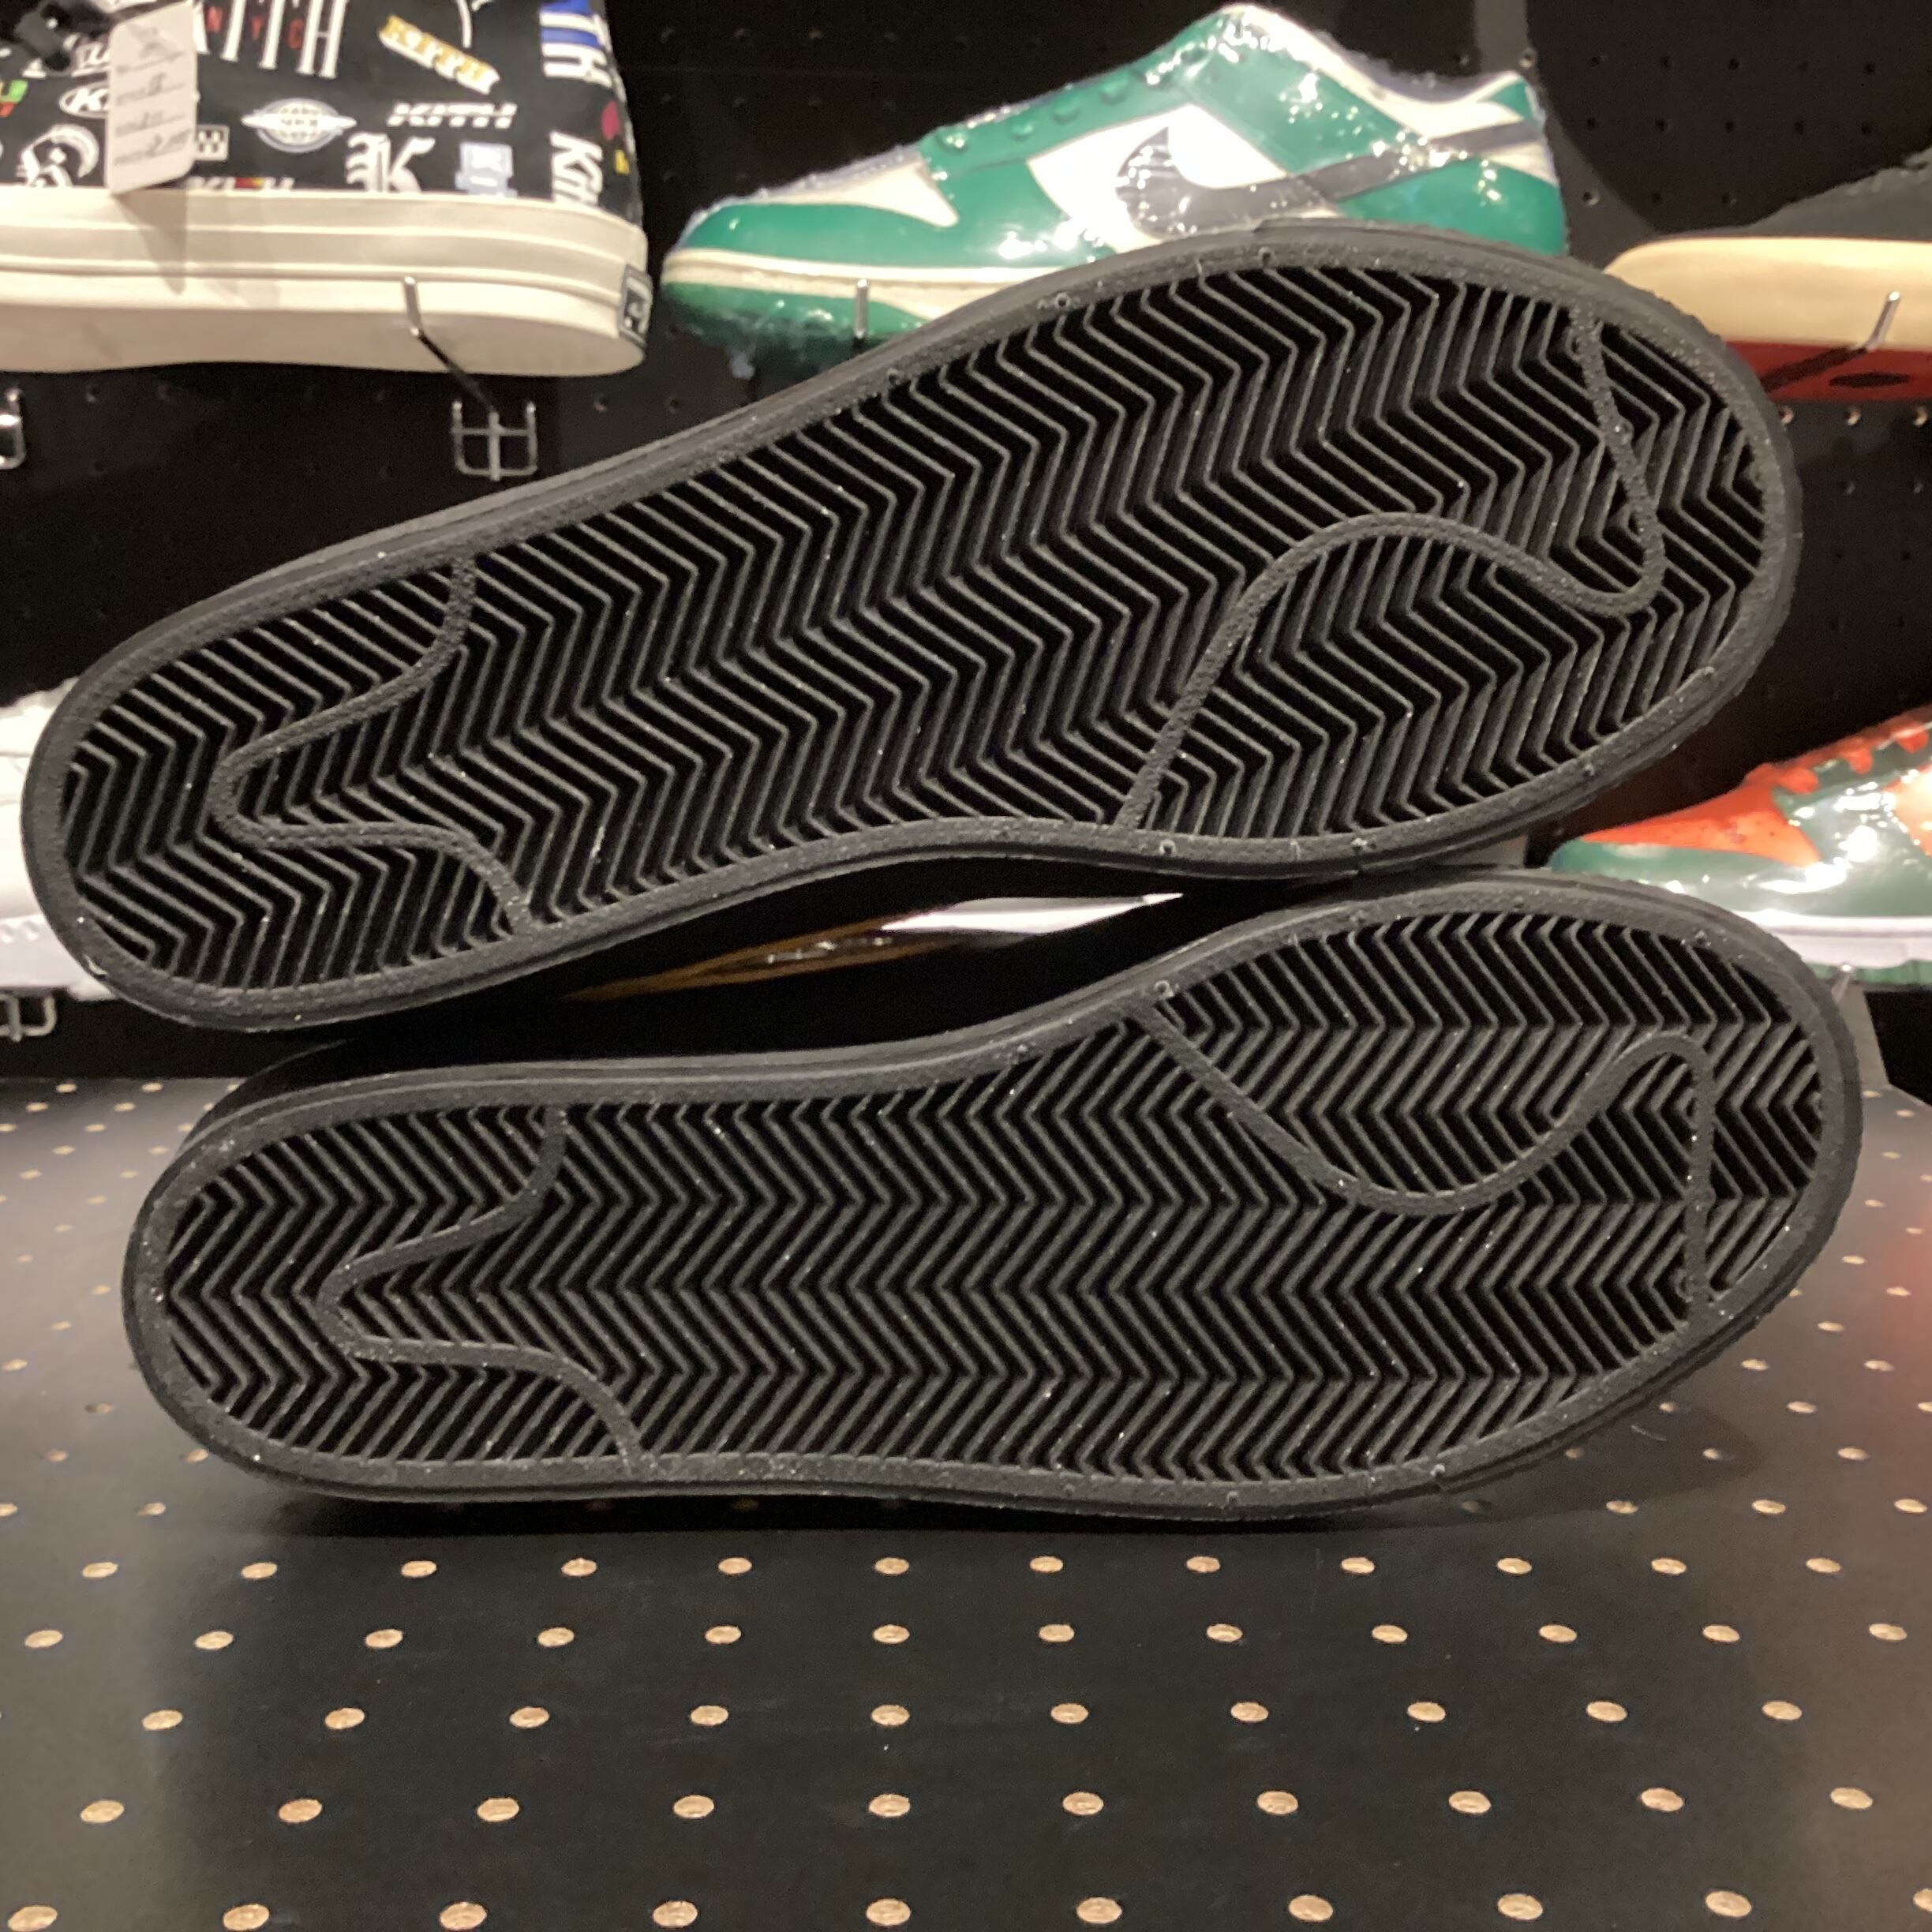 Supreme®/Nike SB Blazer Mid 27cm